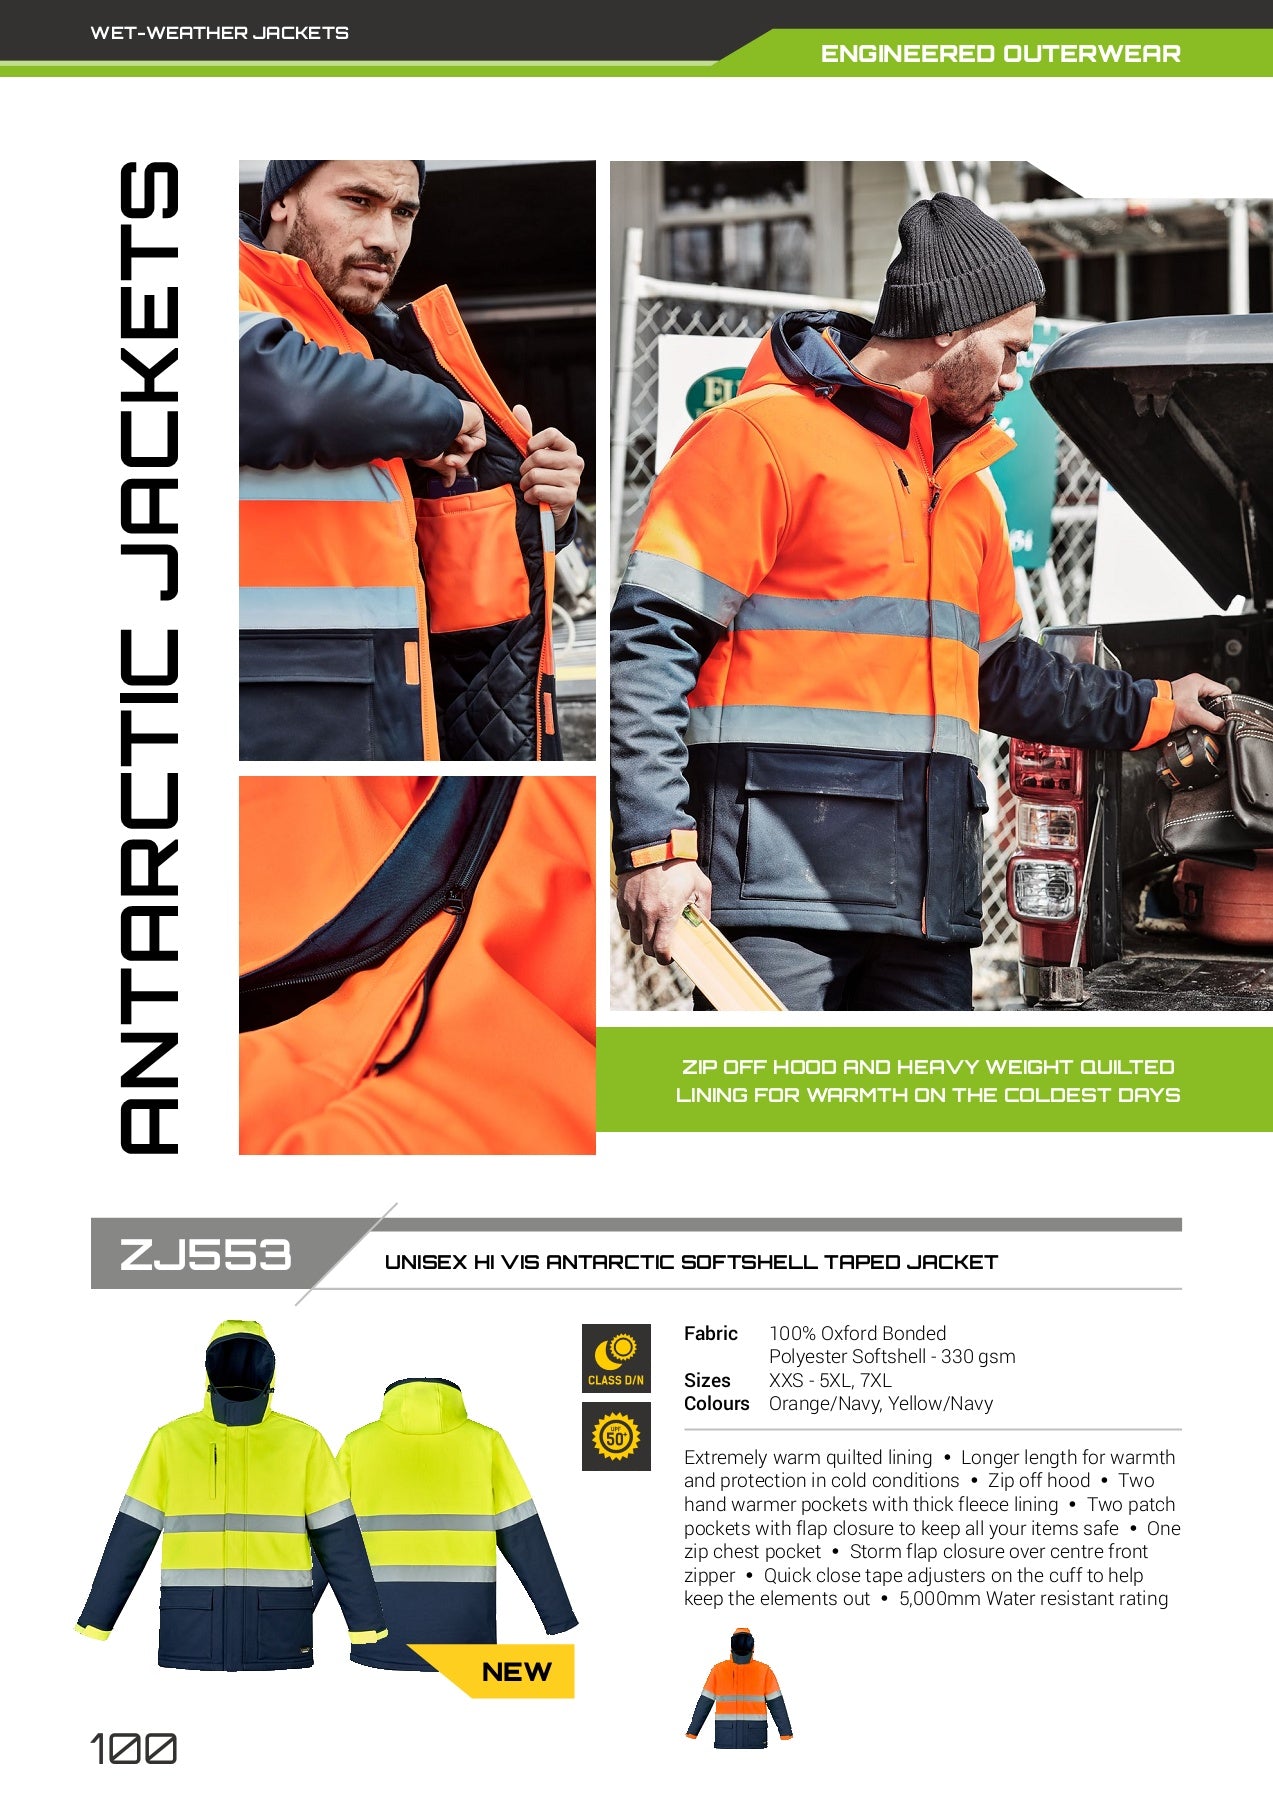 ZJ553 - Unisex Hi Vis Antarctic Softshell Taped Jacket